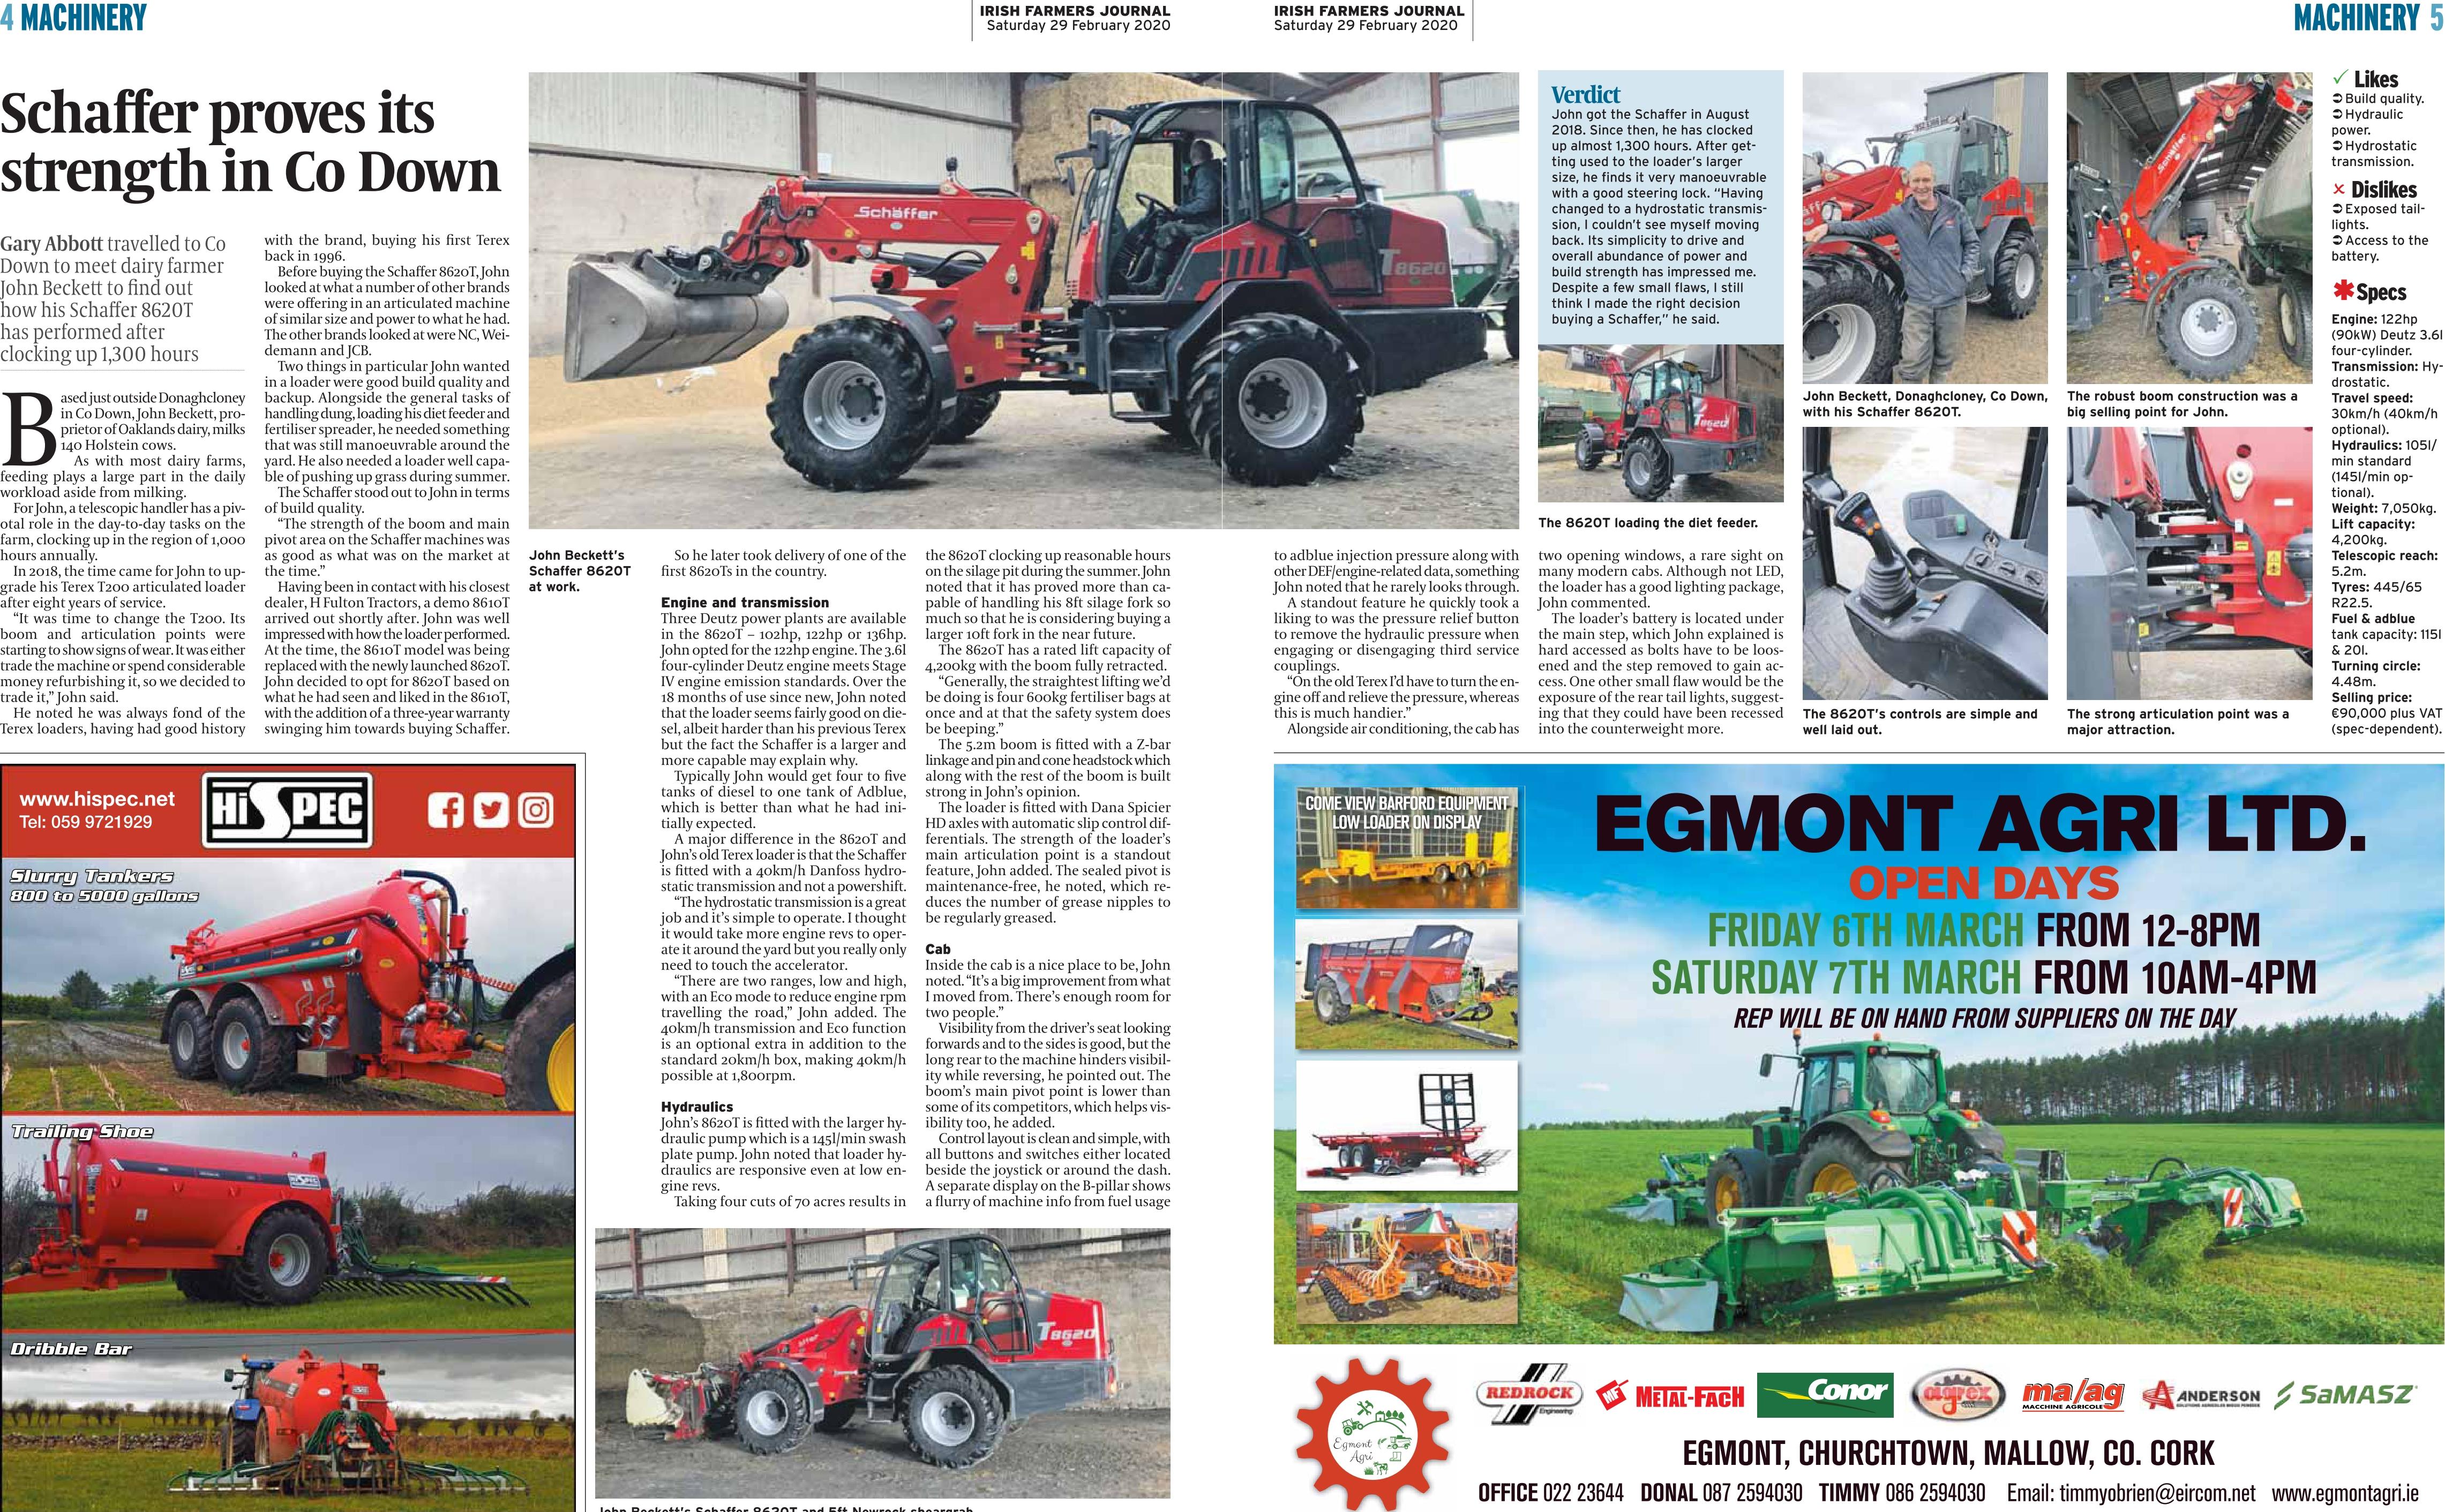 Irish Farmers Journal Reviews The 8620 T